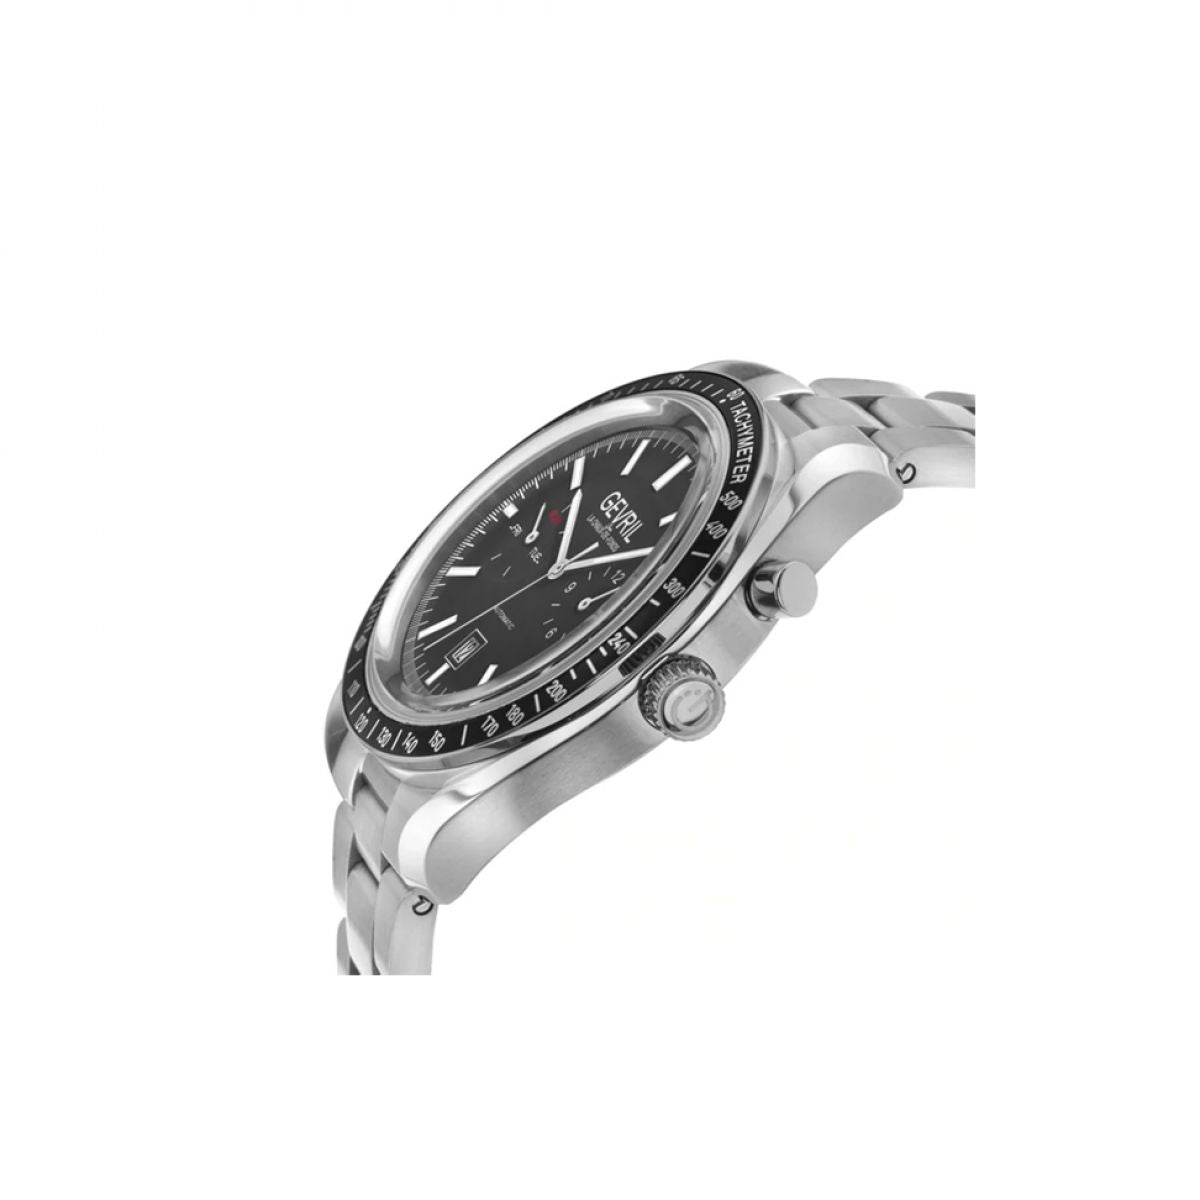 Gevril Lenox 49002 Heren Horloge 44mm 5 ATM